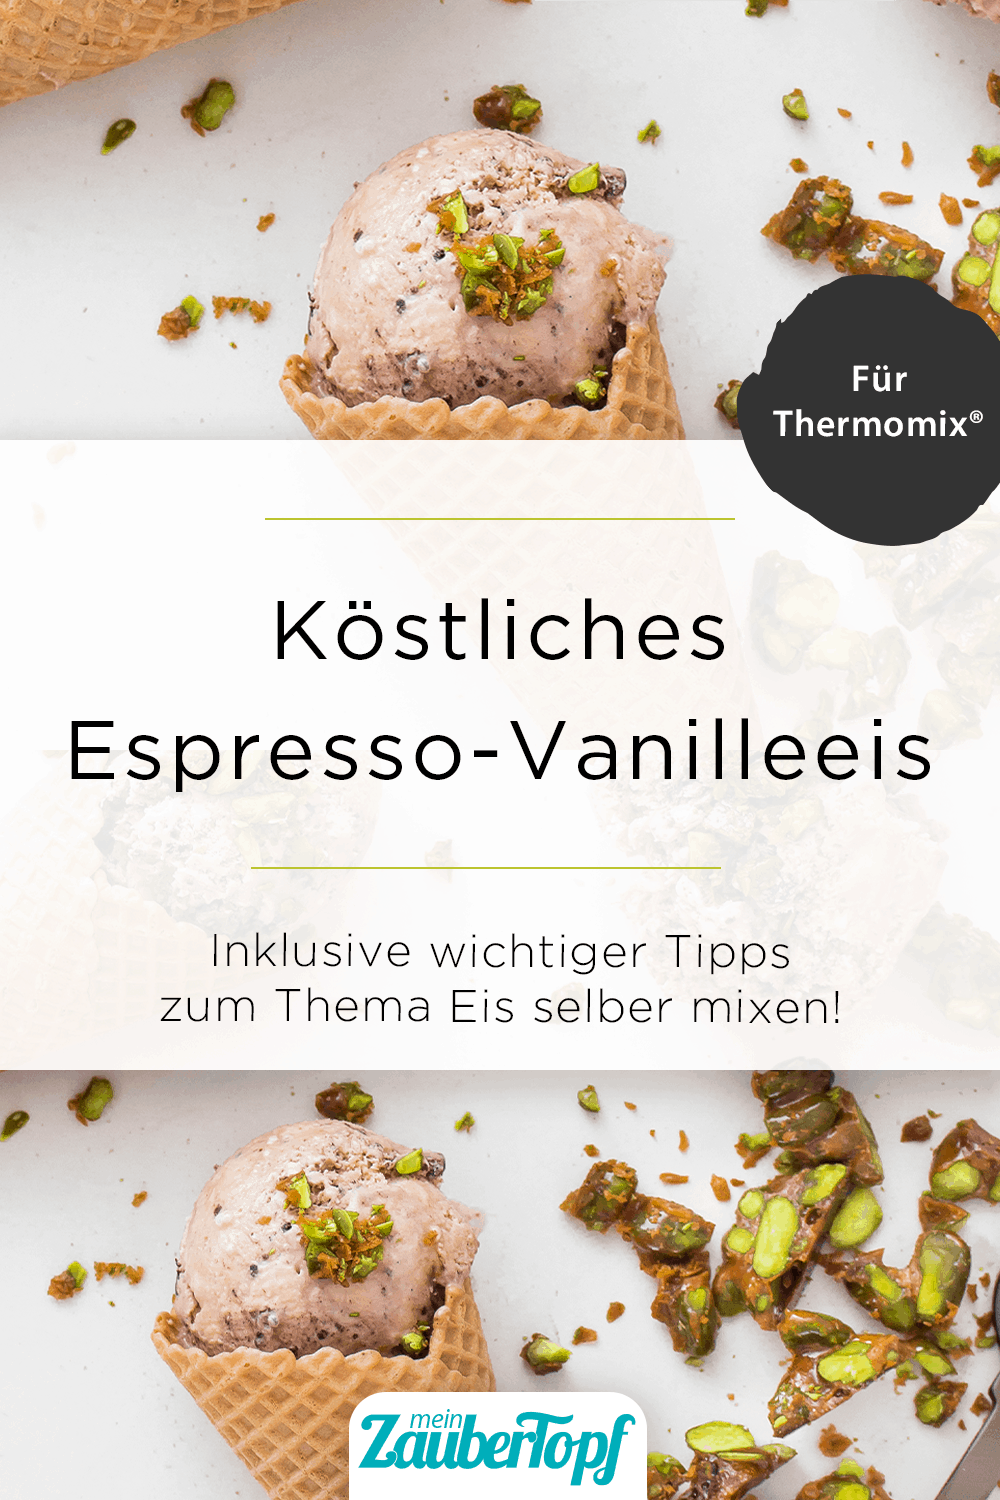 Espresso-Vanilleeis aus dem Thermomix® – Foto: Tina Bumann